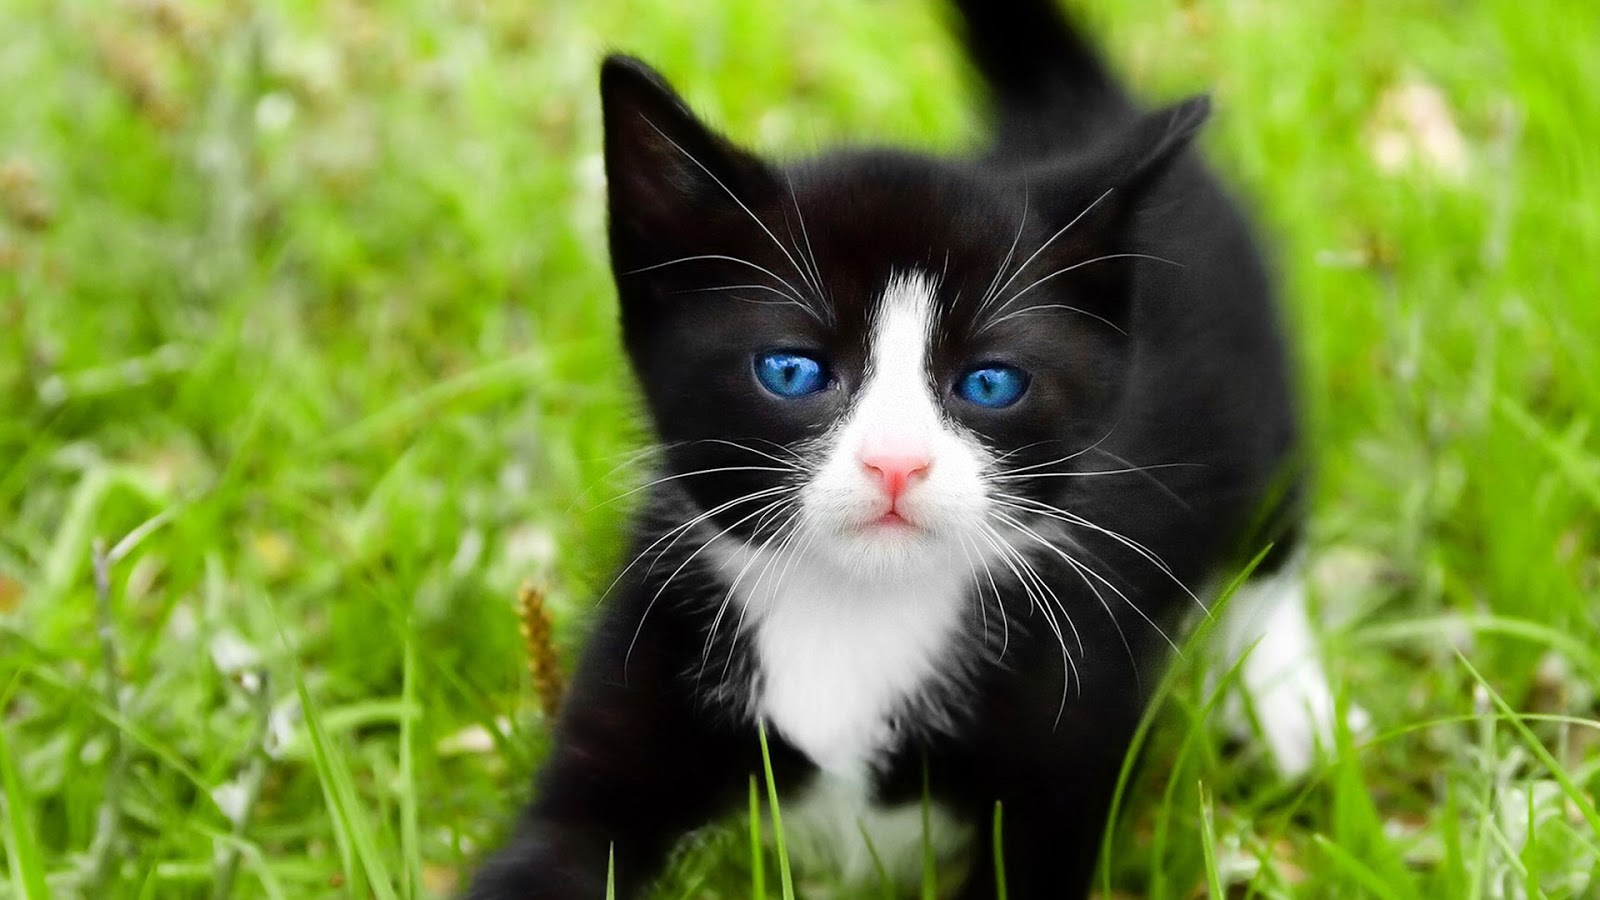 Black Kitten with Blue Eyes | Full HD Desktop Wallpapers 1080p